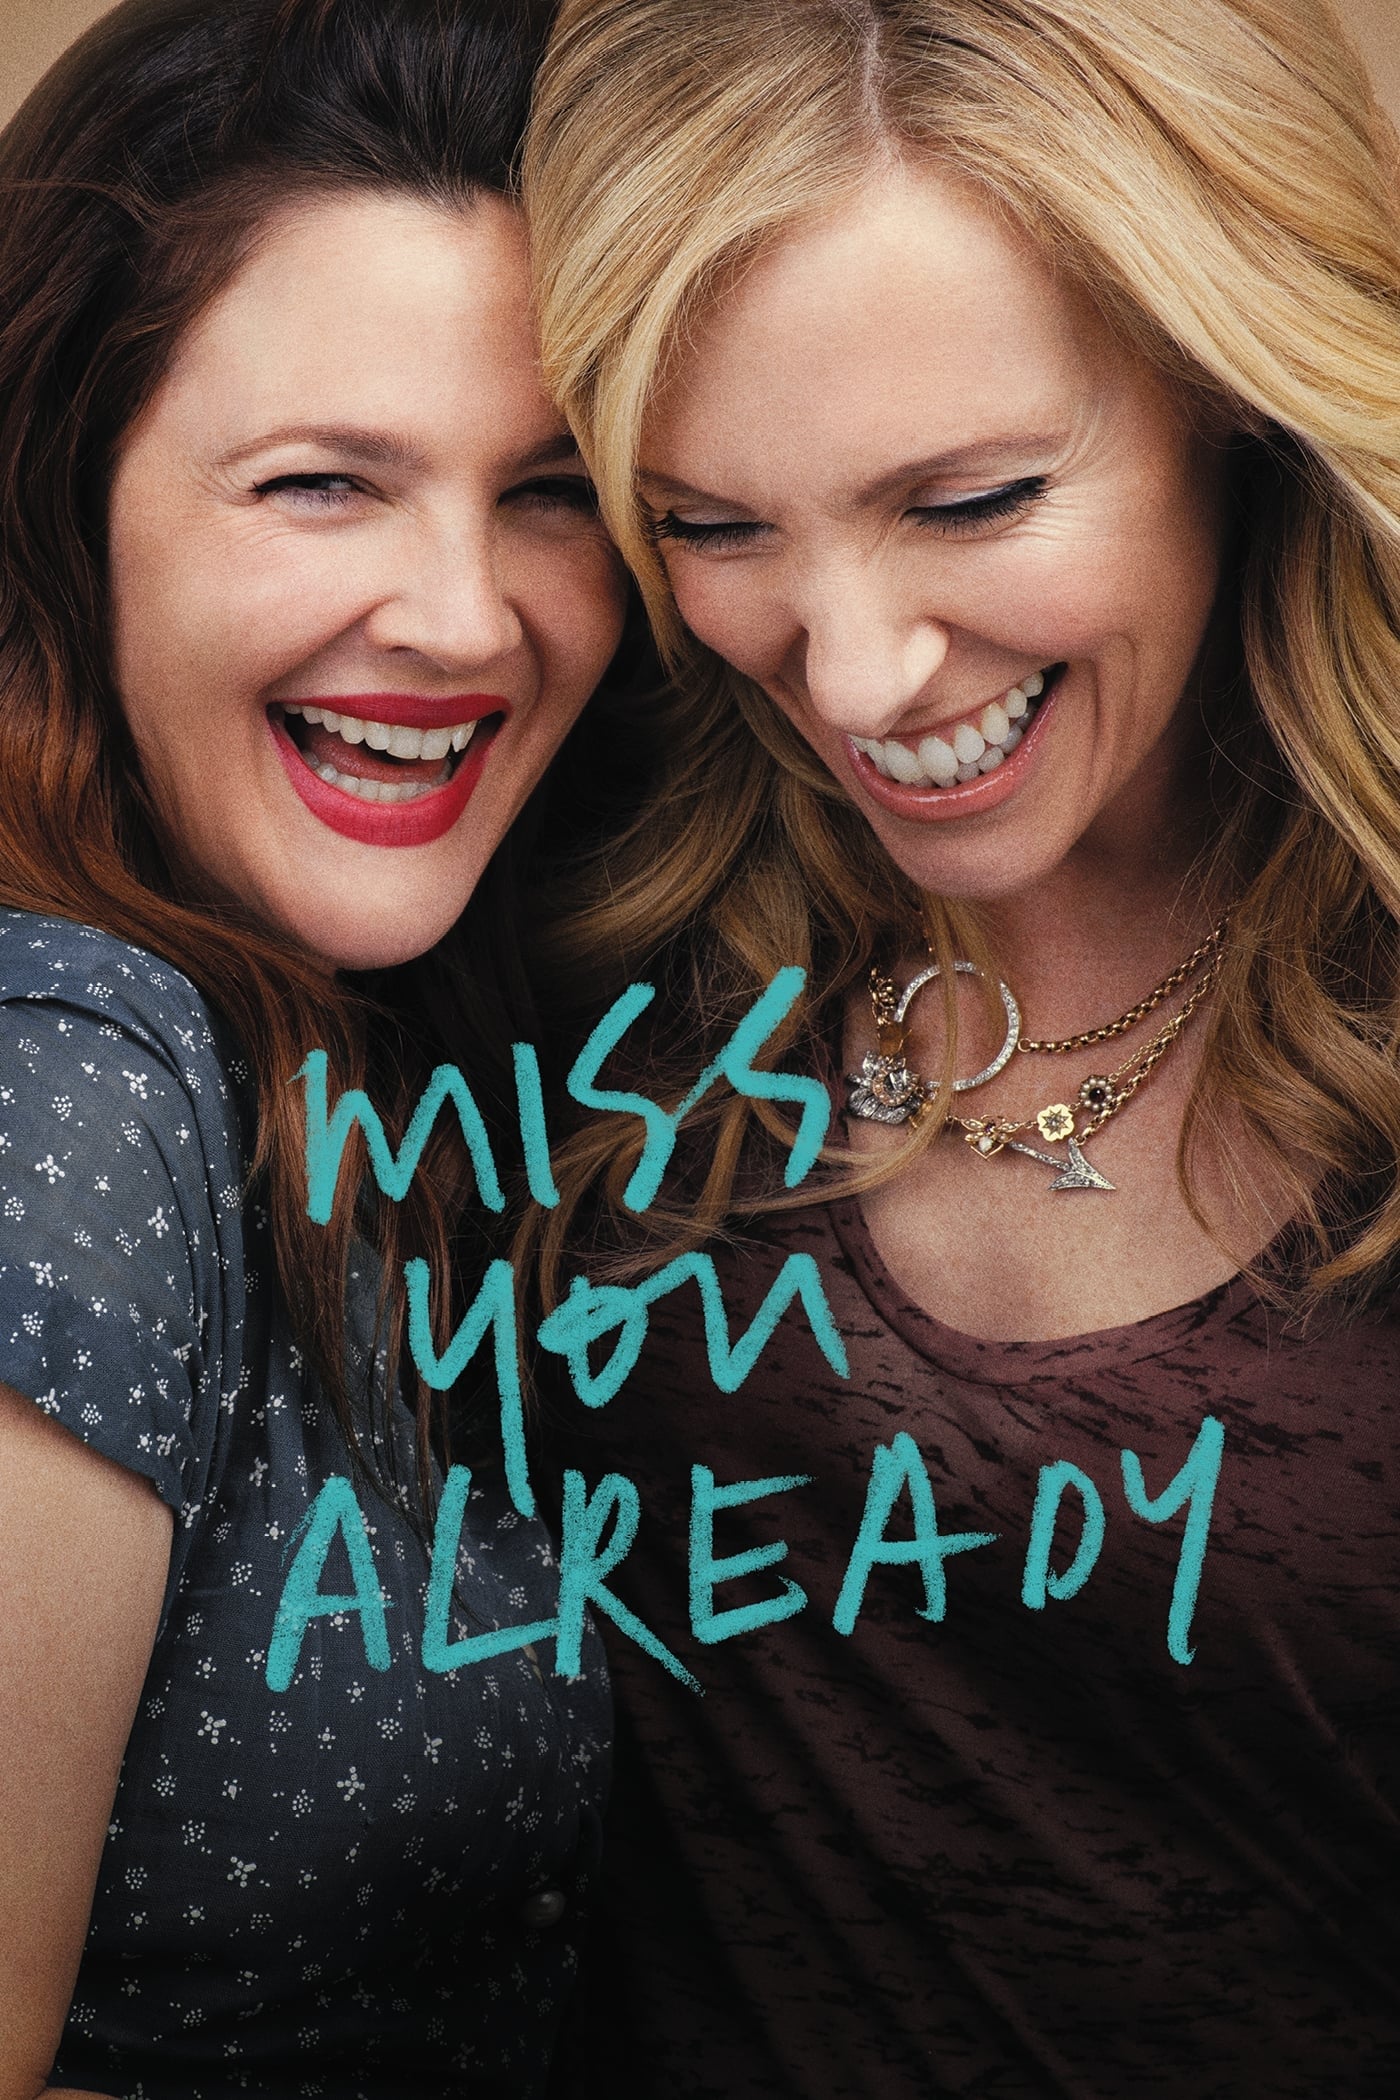 Miss You Already (2015)